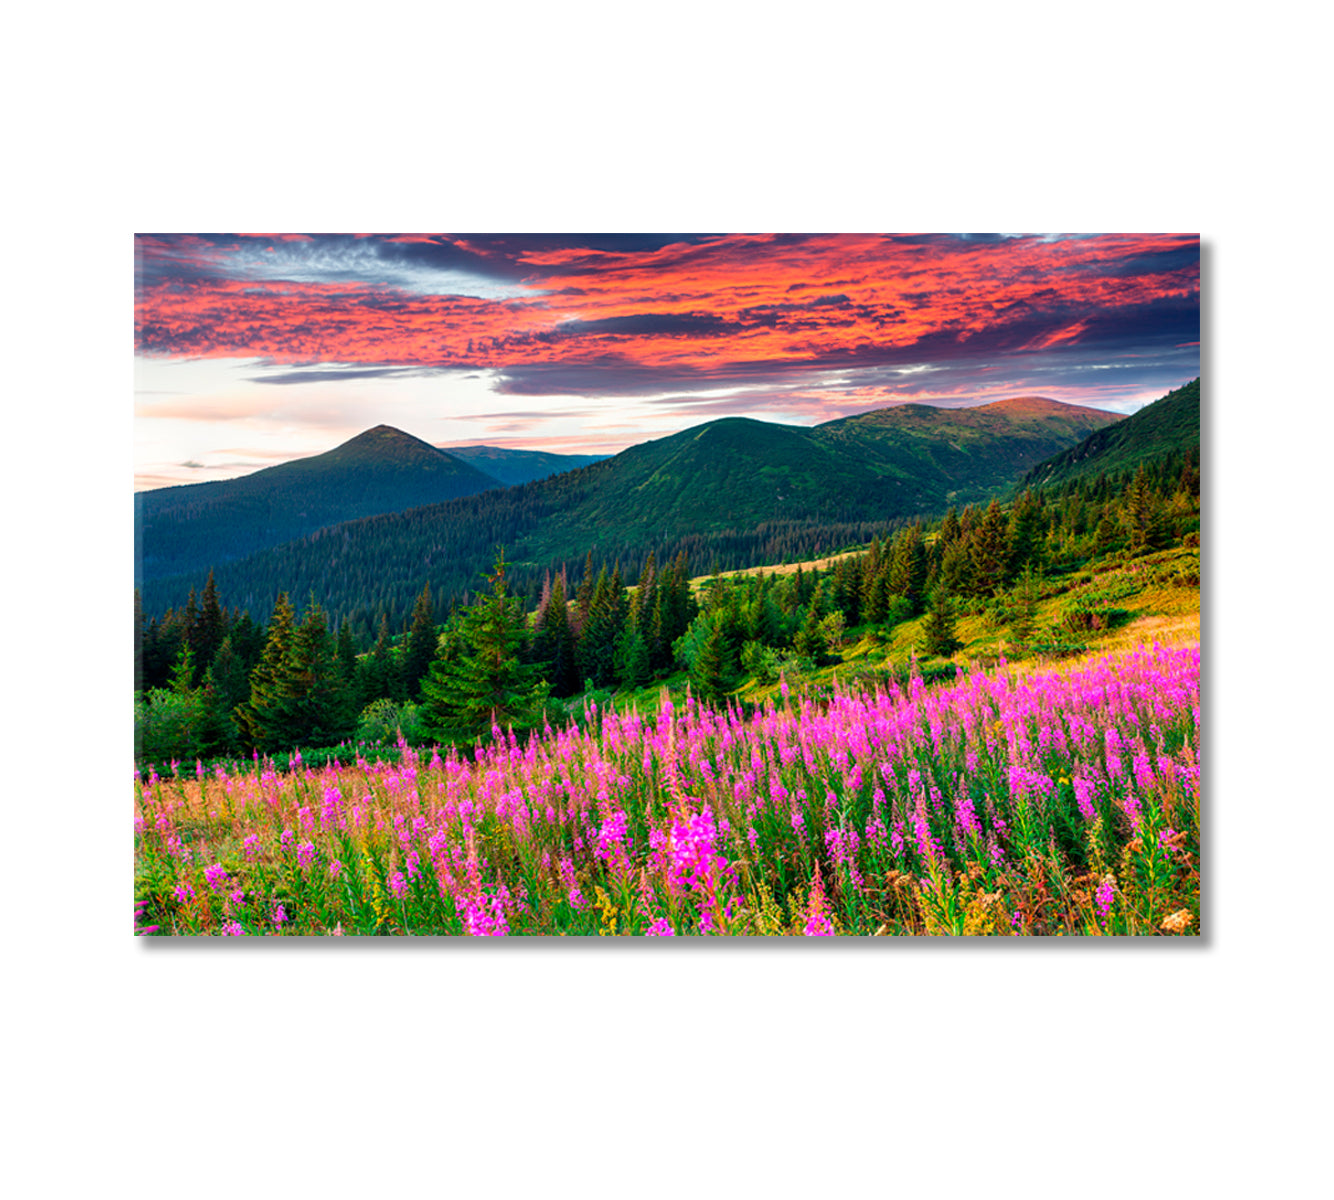 Flower Field near Mountains Canvas Print-Canvas Print-CetArt-1 Panel-24x16 inches-CetArt